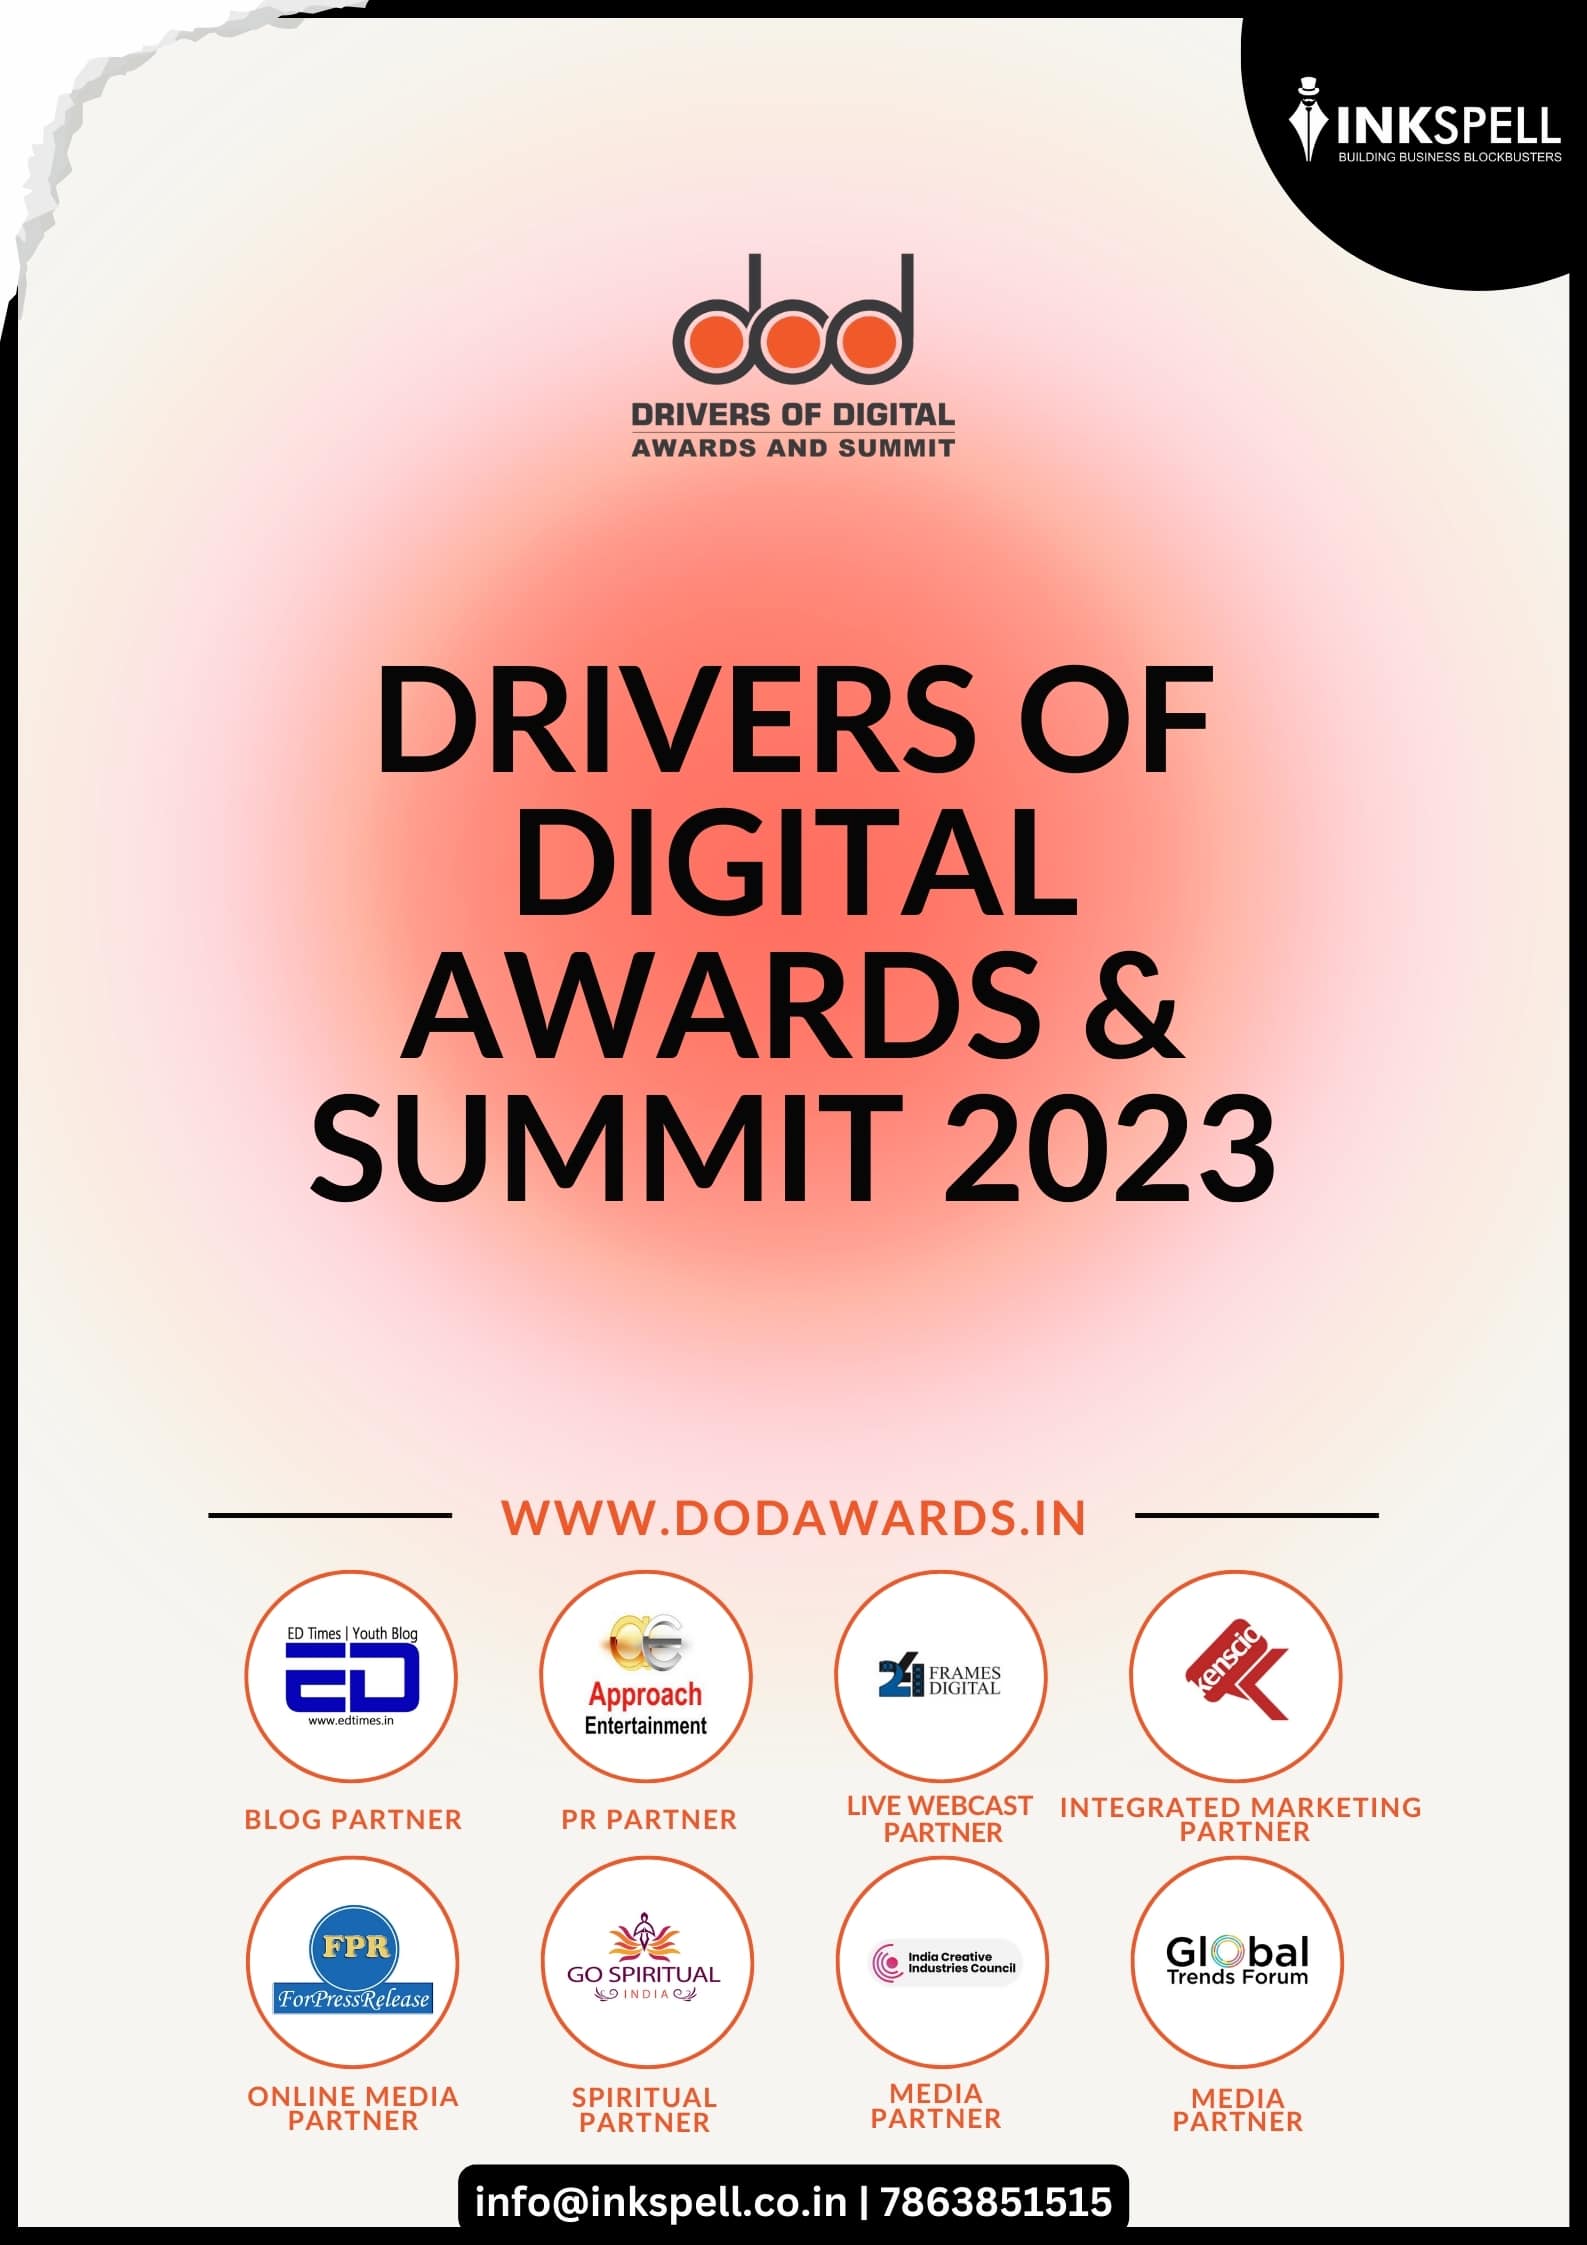 Inkspell Media Announces Drivers of Digital Awards & Summit 2023, Set to Ignite Innovation in New Delhi